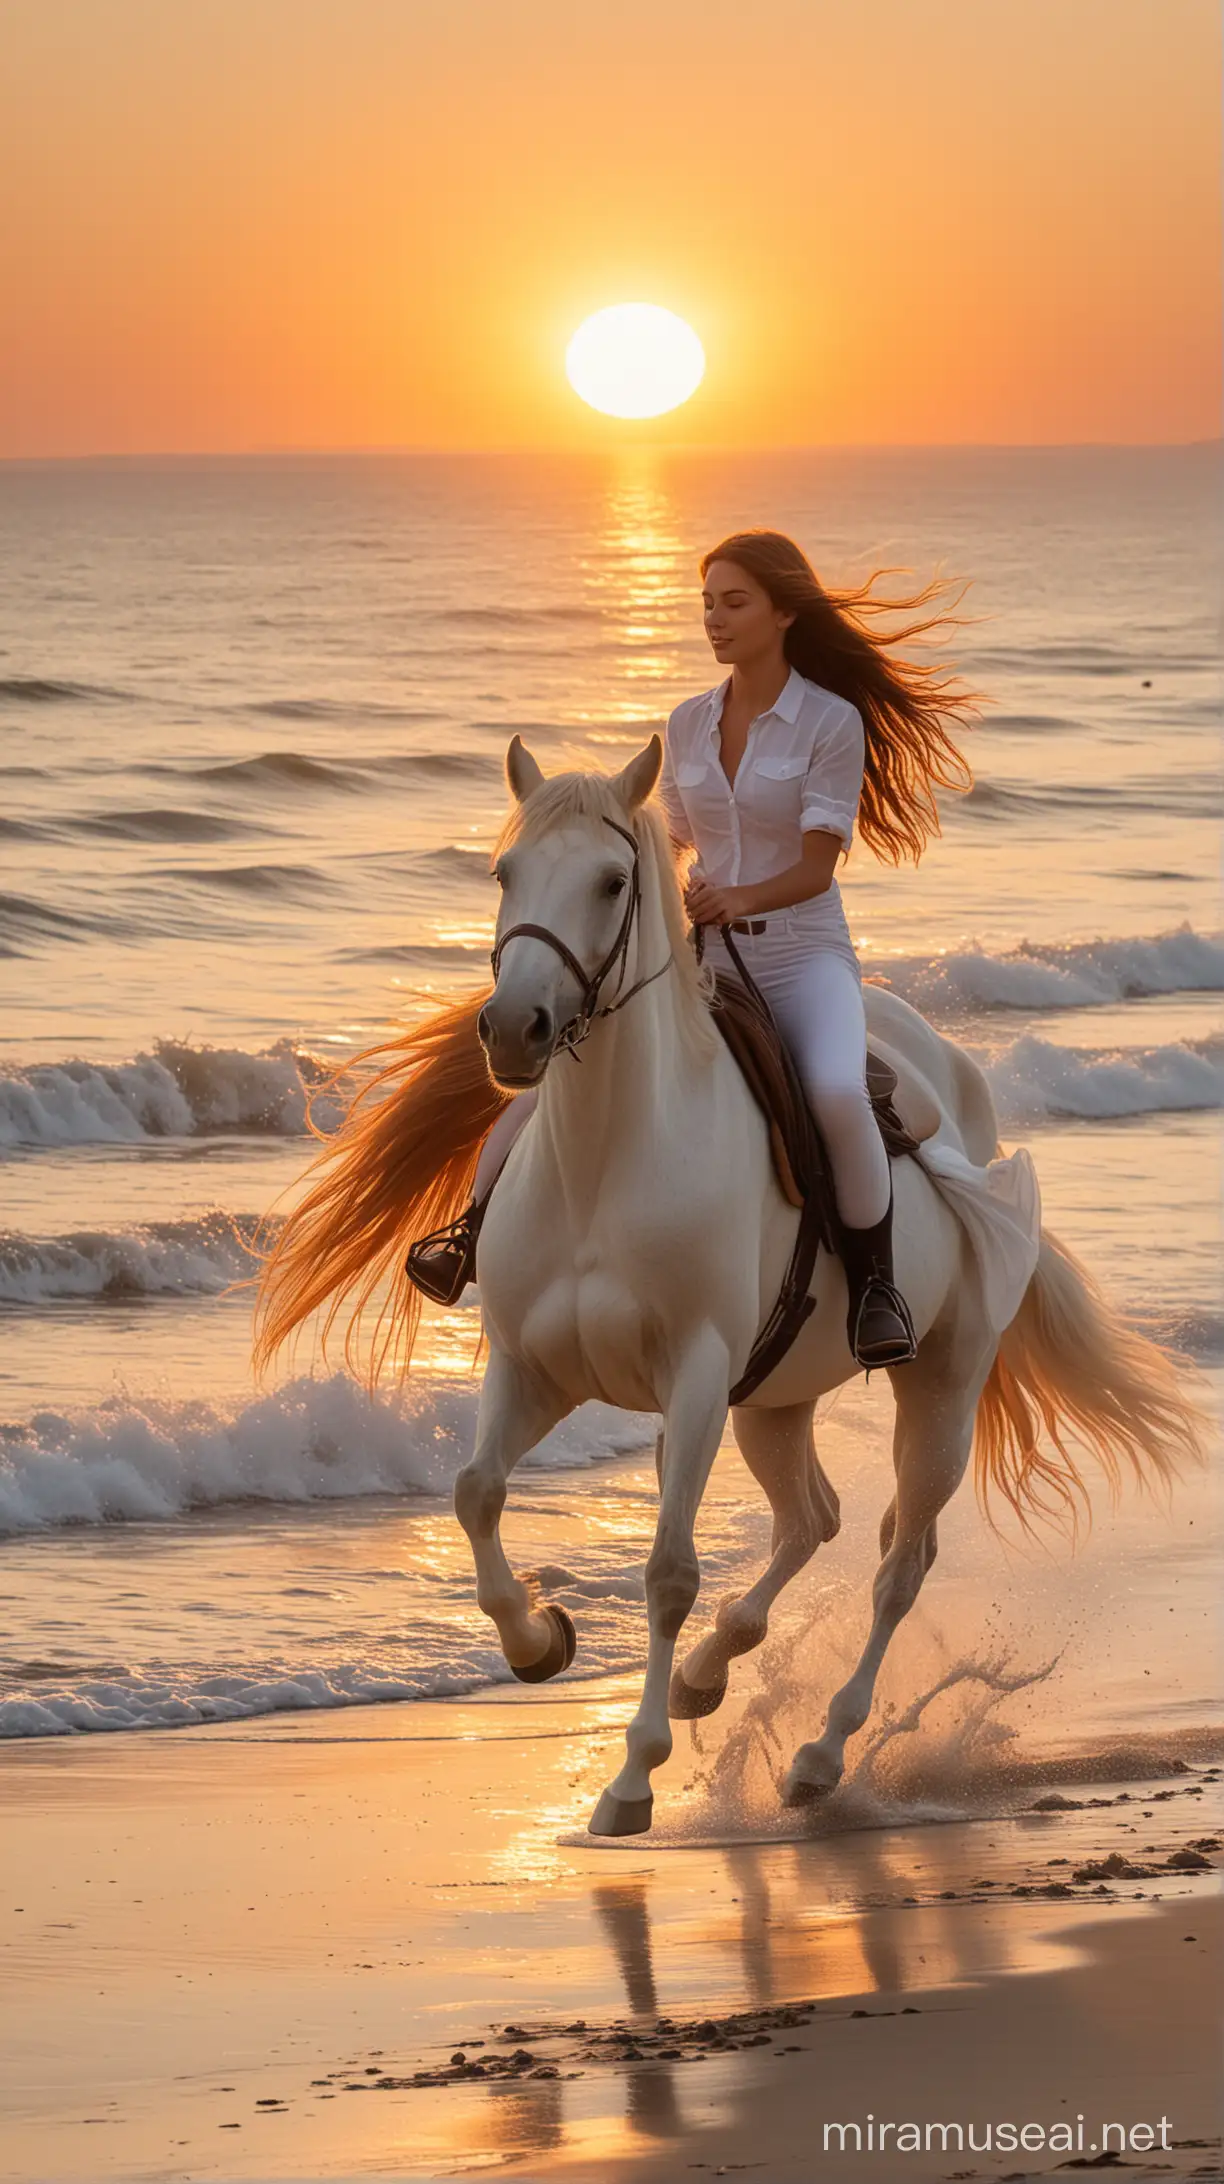 Romantic Sunset Horseback Ride Beautiful Girl and Handsome Man on Sandy Beach